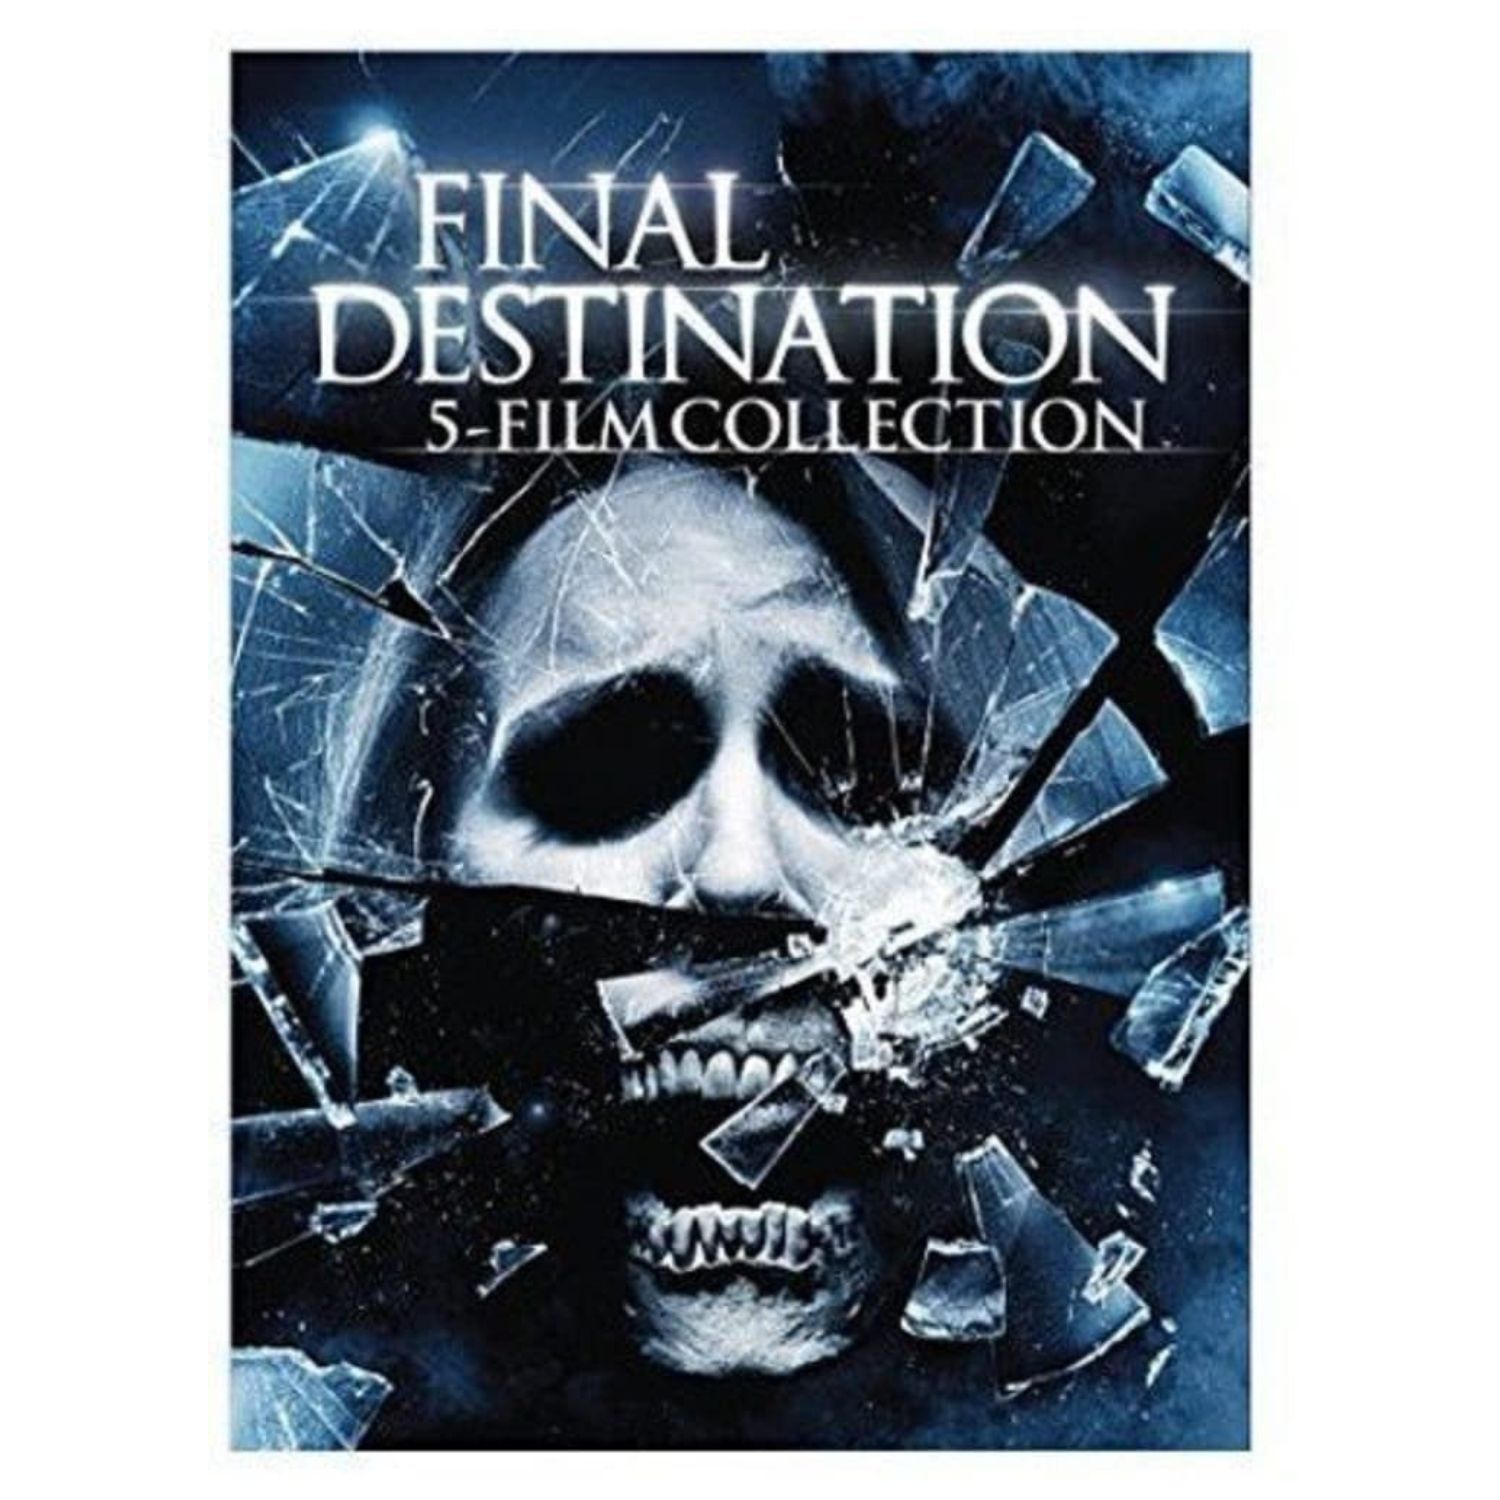 Final Destination 5-Film Collection cover